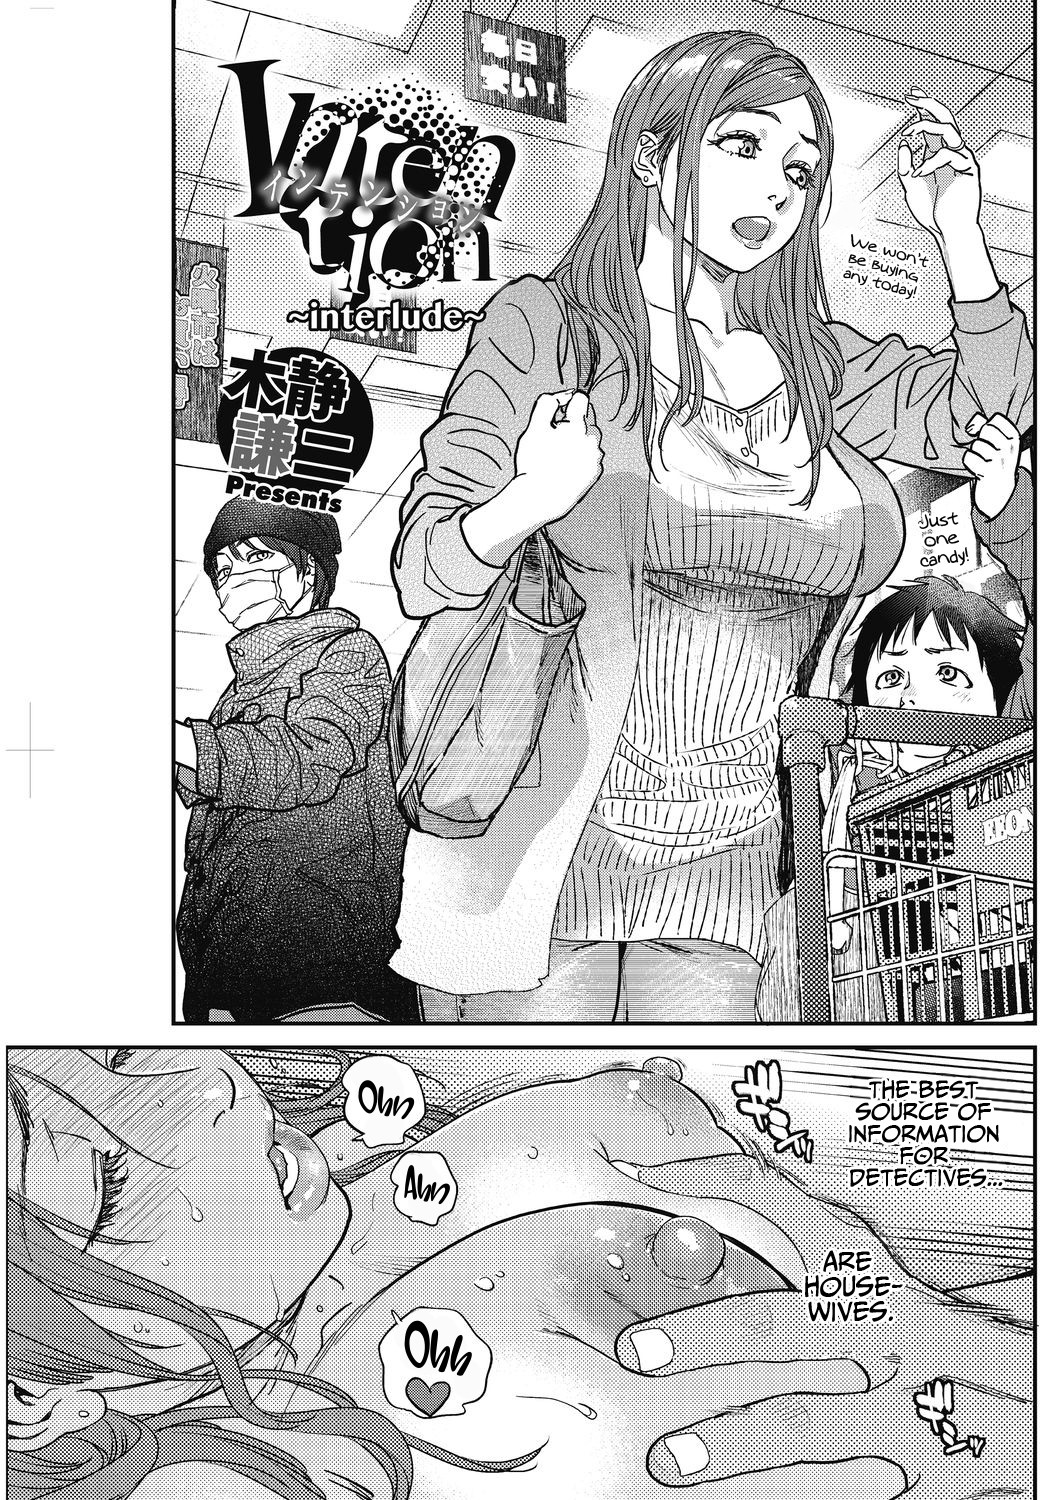 Hentai Manga Comic-Intention ~Interlude~-Read-1